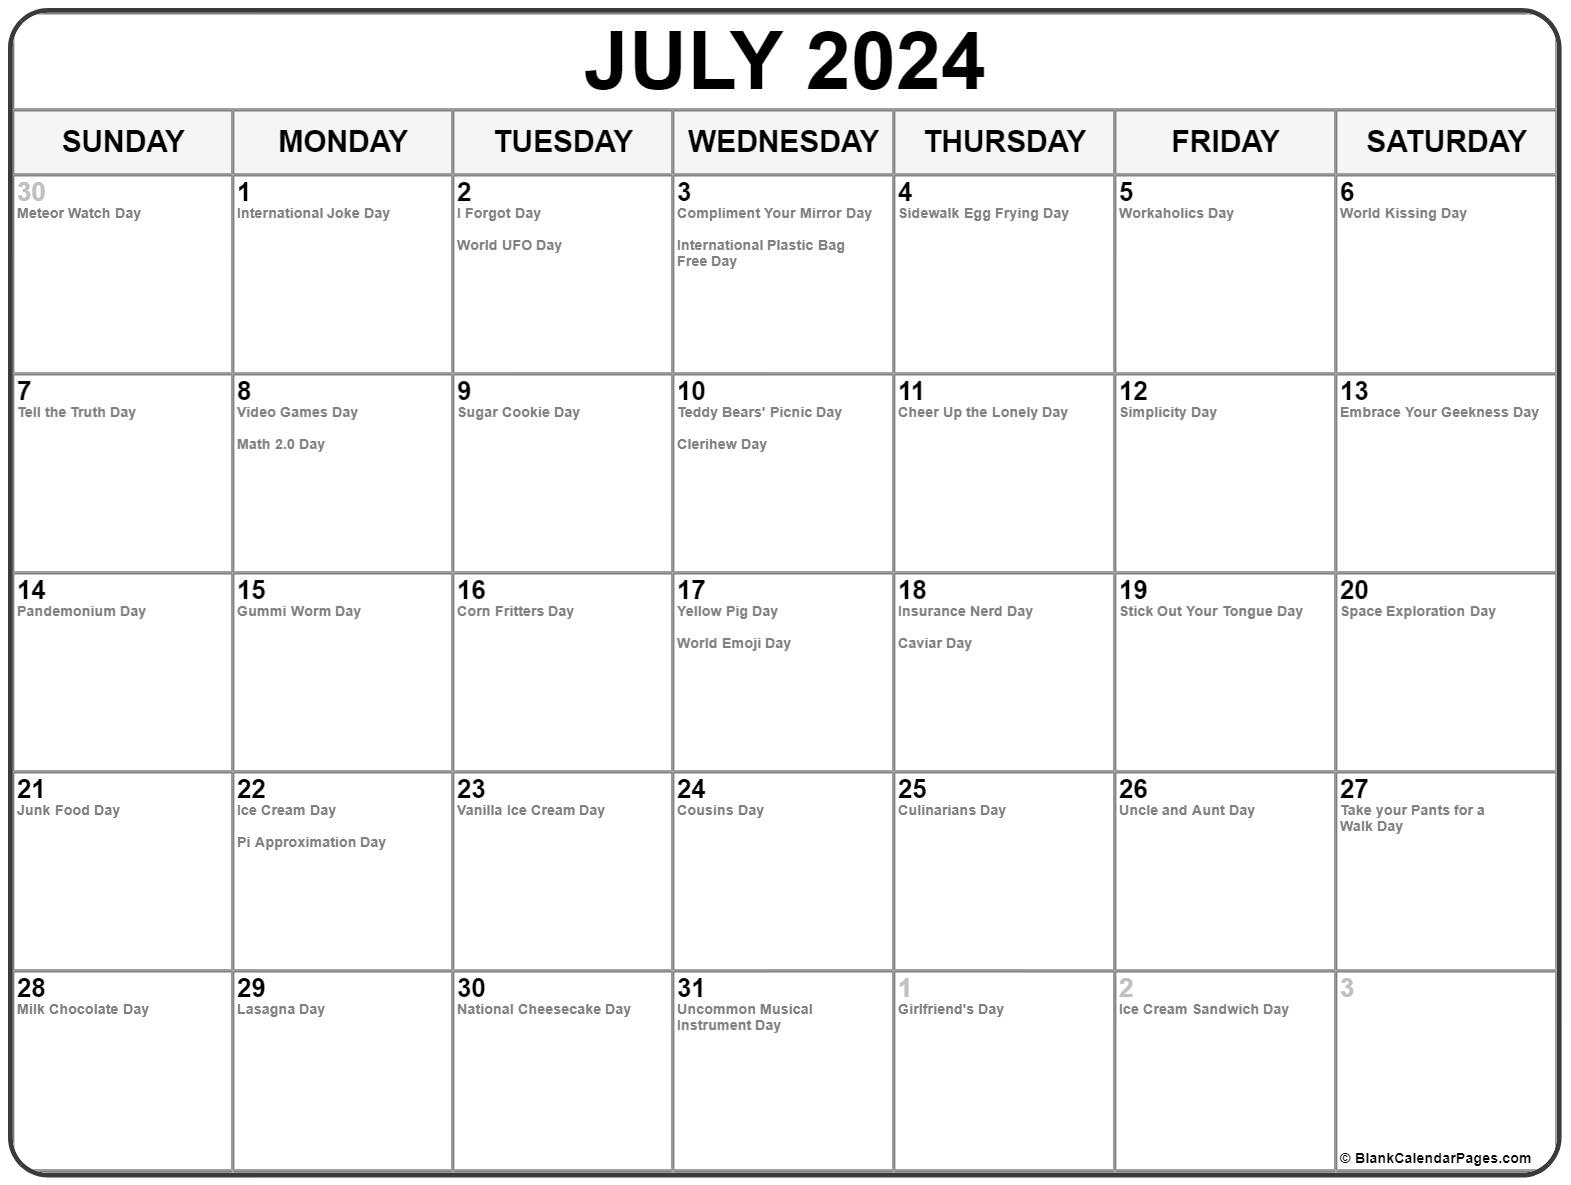 July 2024 With Holidays Calendar | July Fun Holiday Calendar 2024